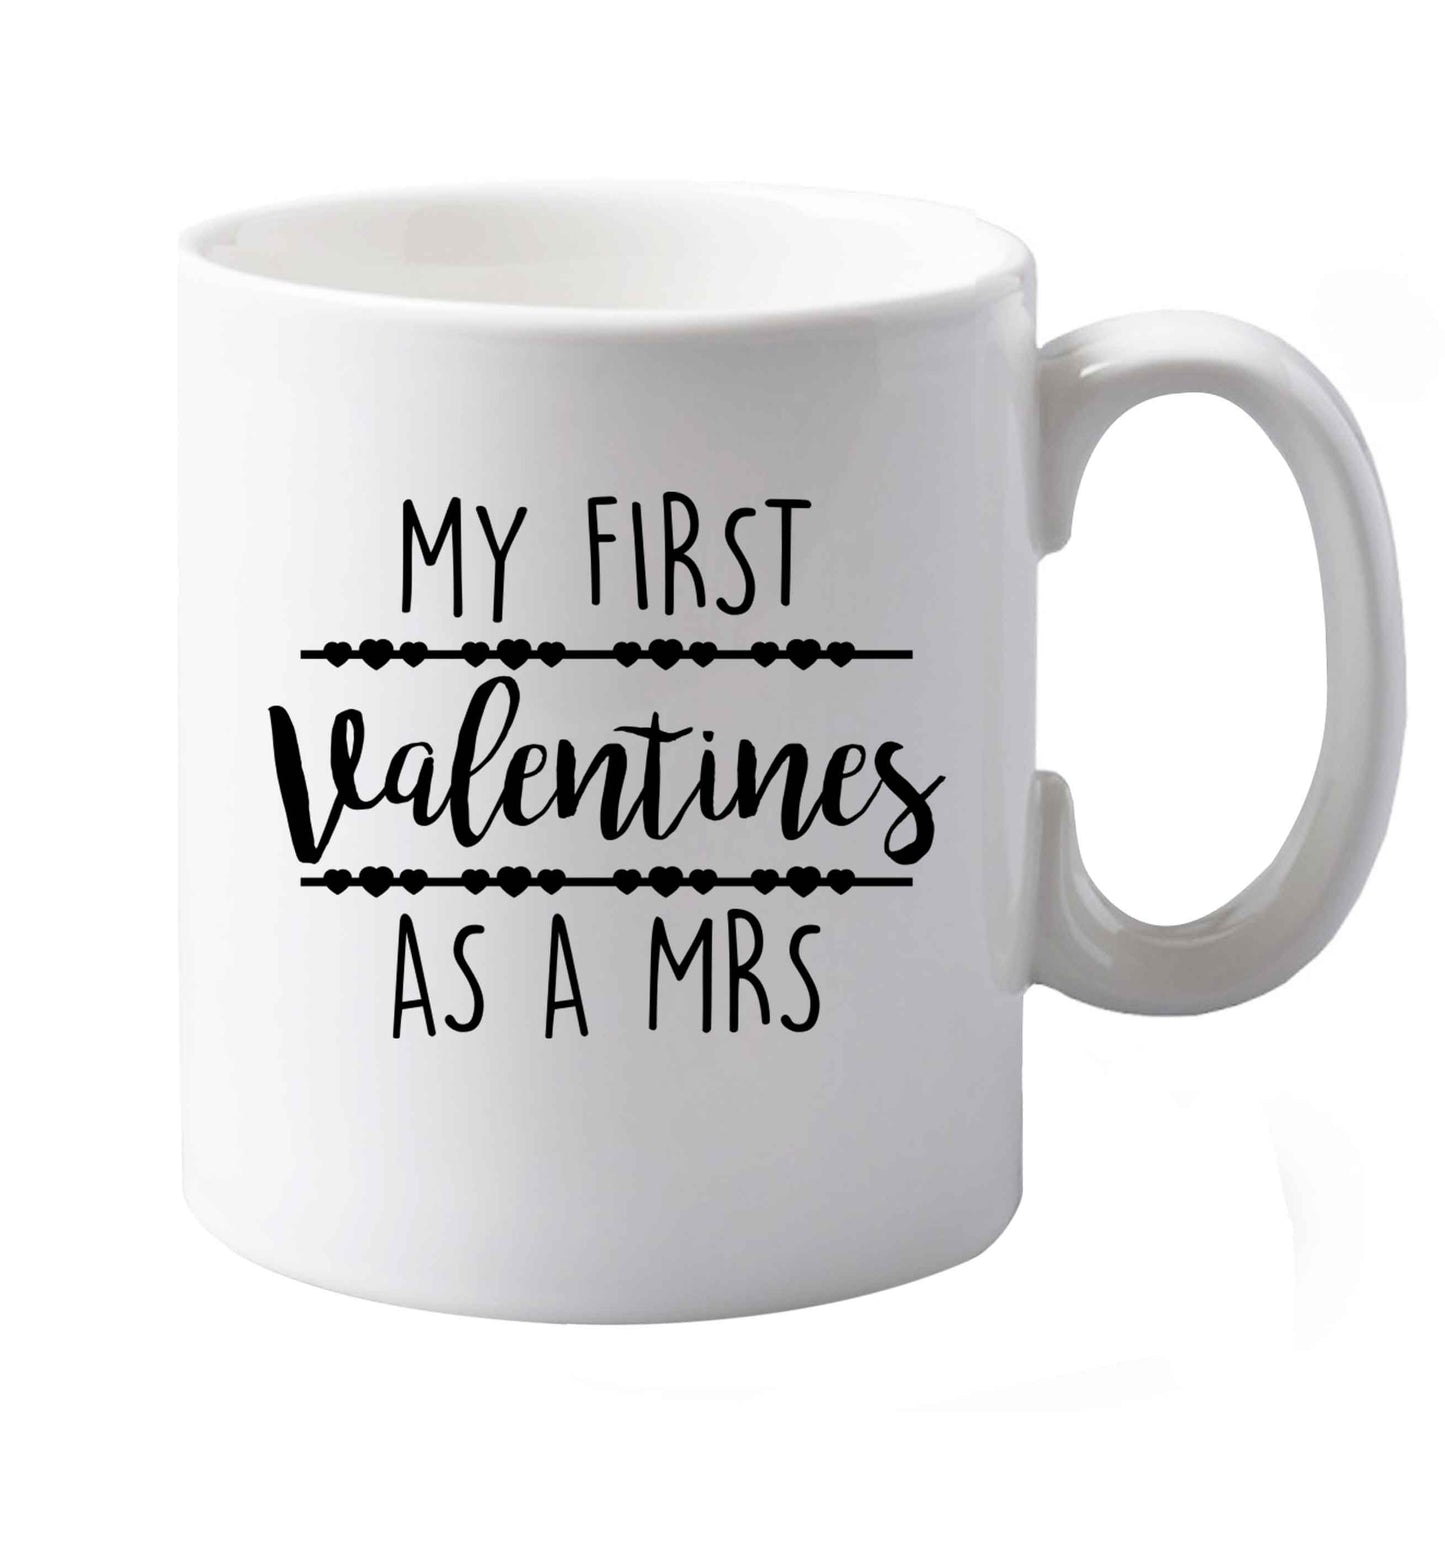 10 oz My first valentines as a Mrs ceramic mug both sides